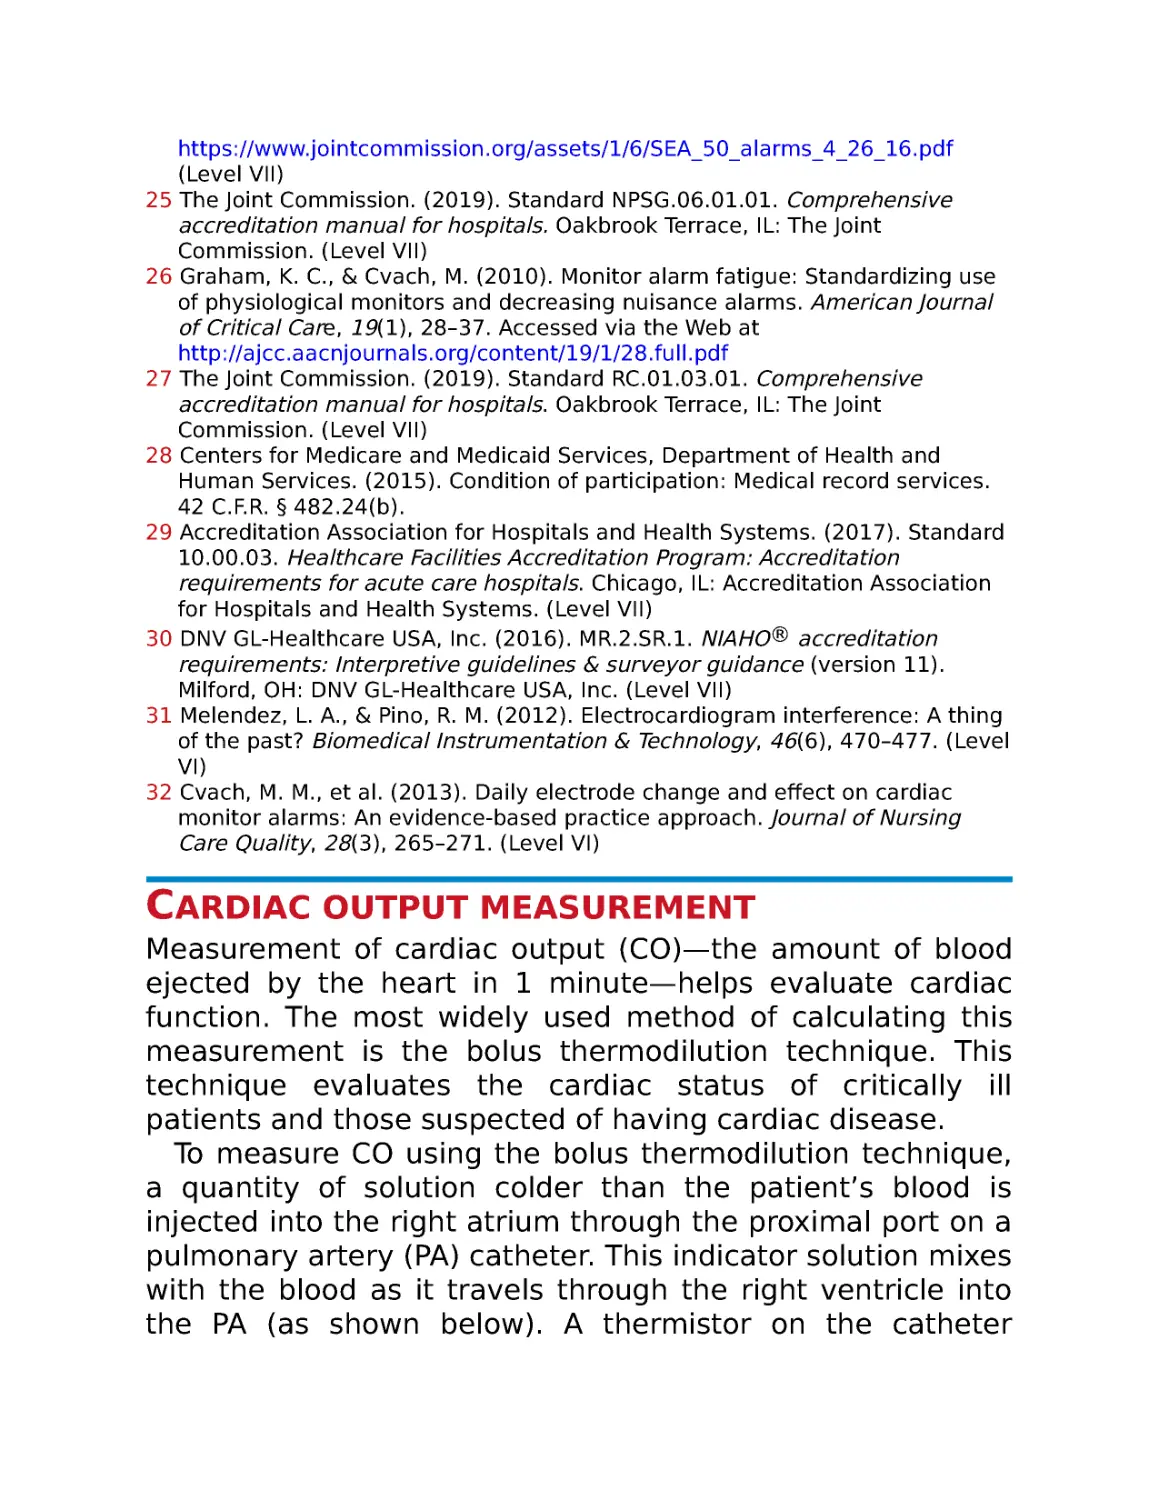 Cardiac output measurement